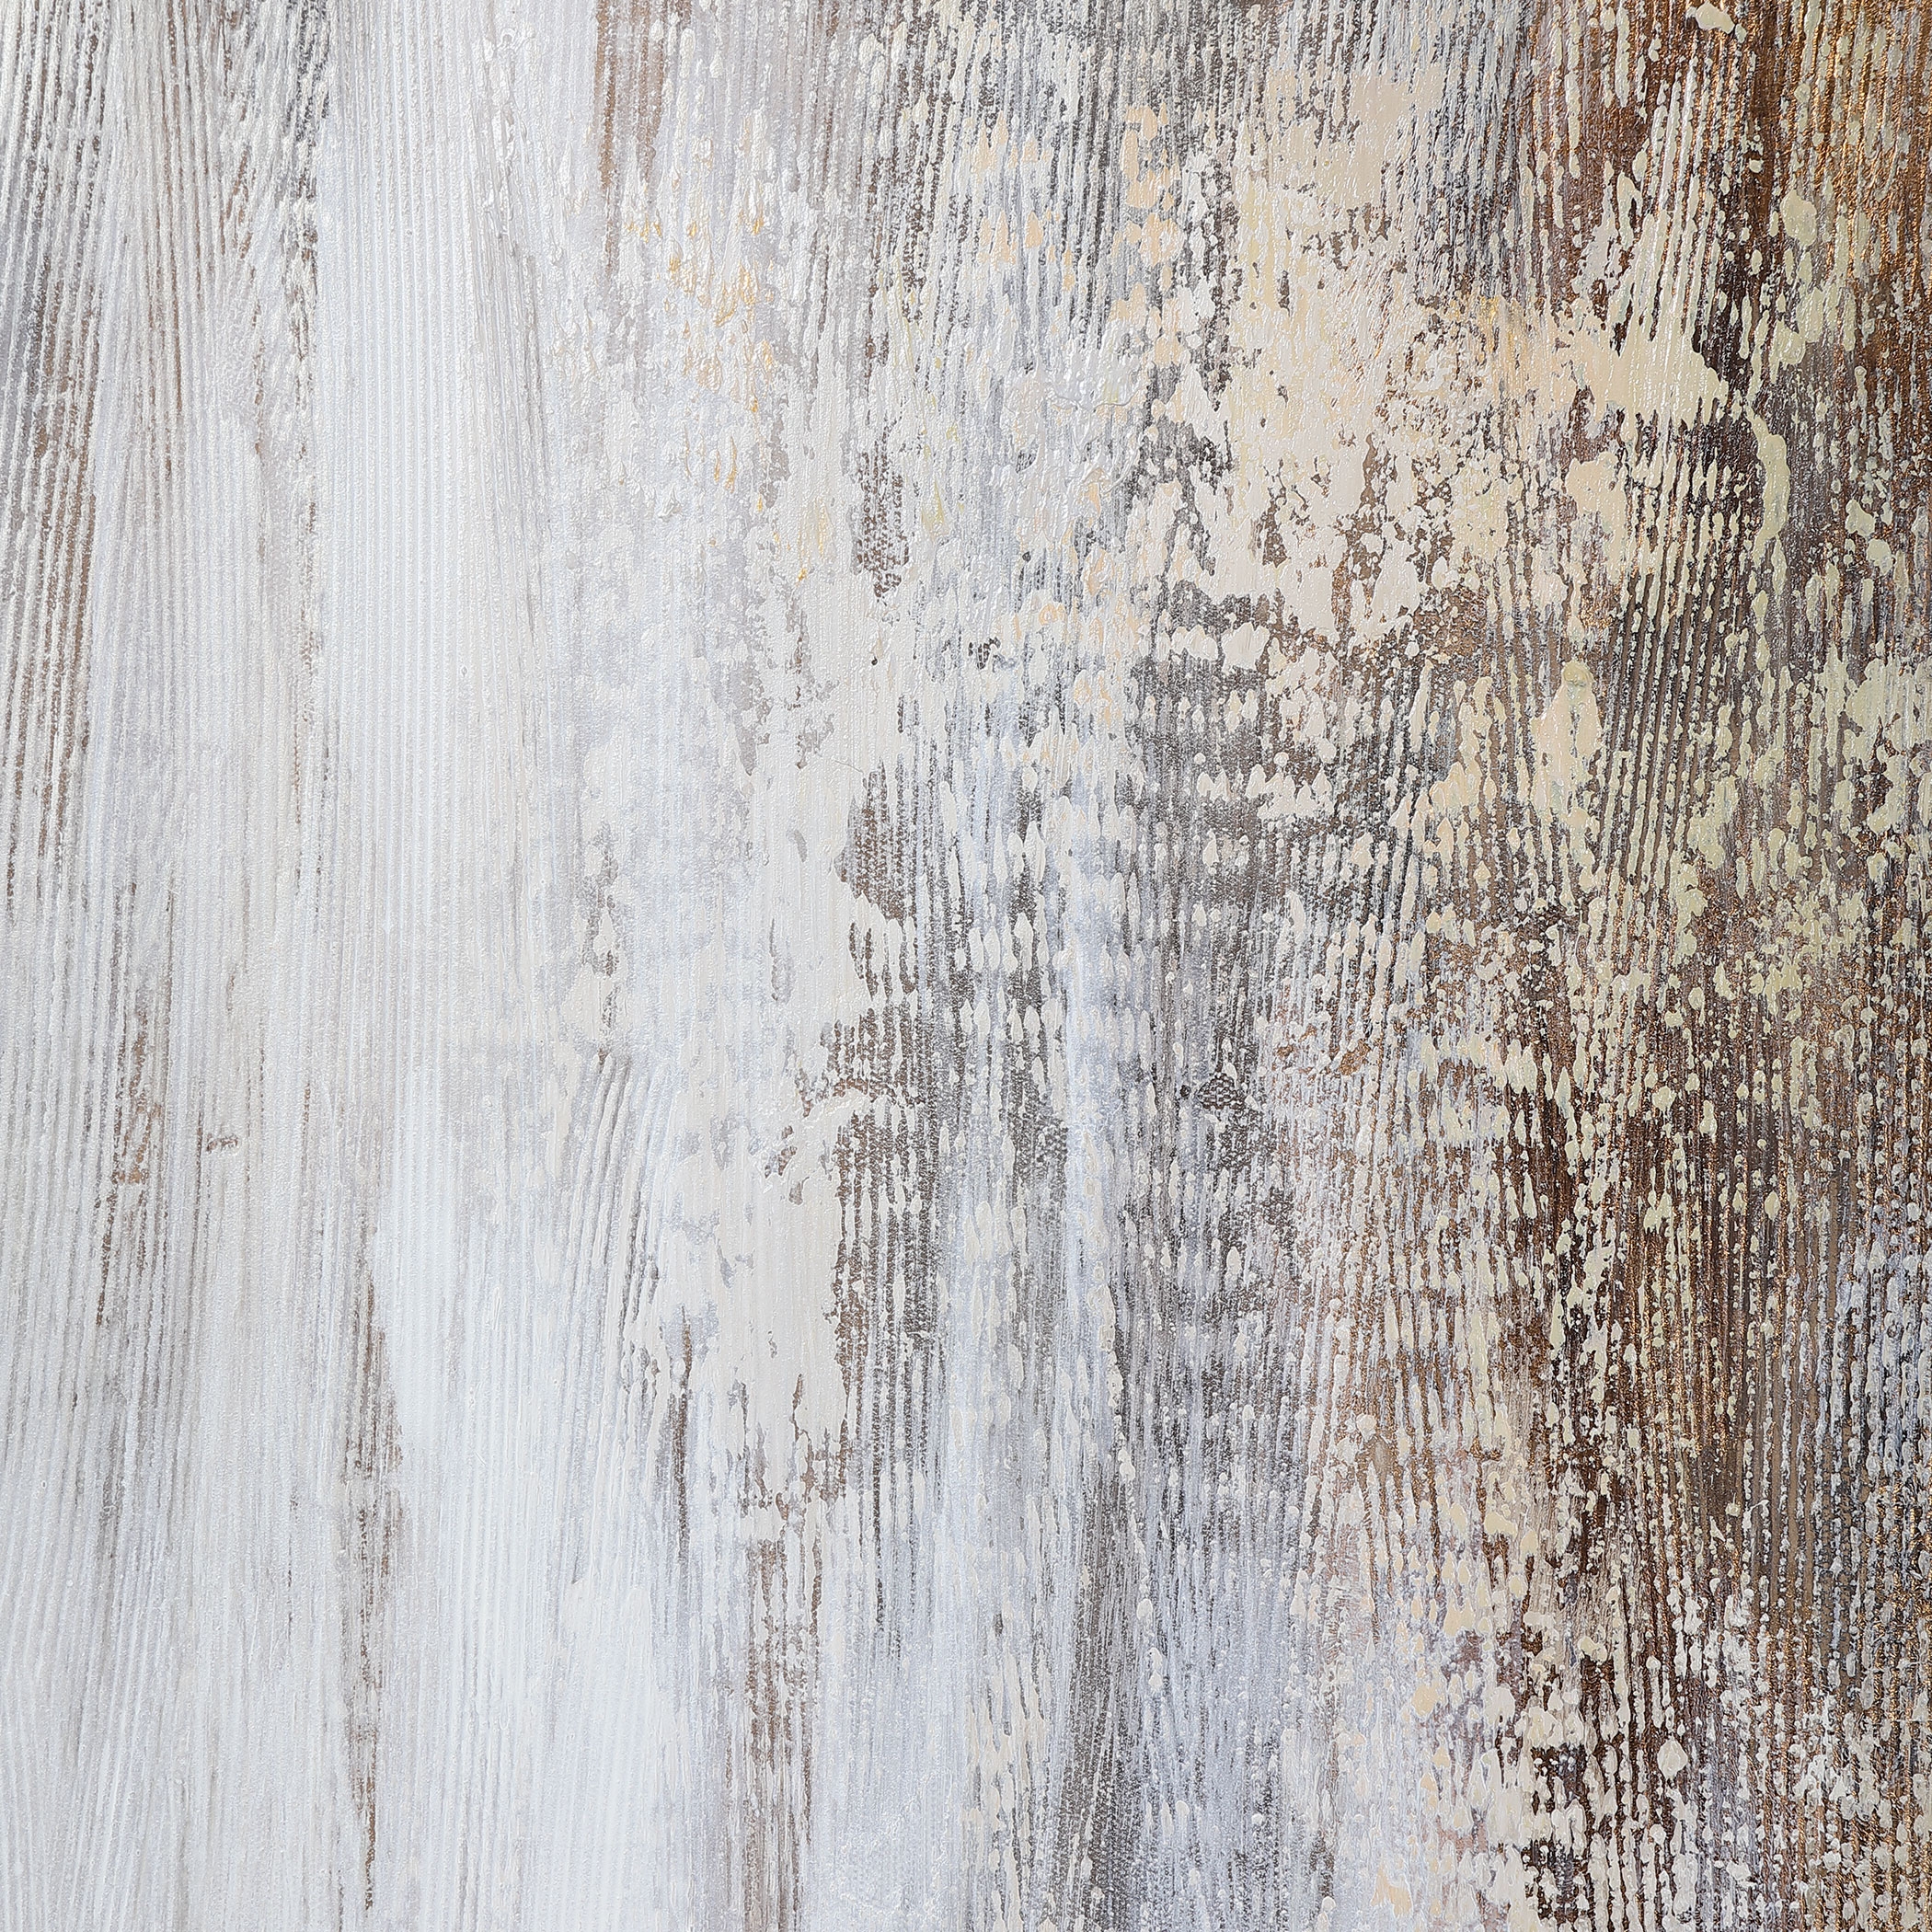 Desert Rain, Hand Painted Abstract Art, 41.25" x 61.25" - Image 5